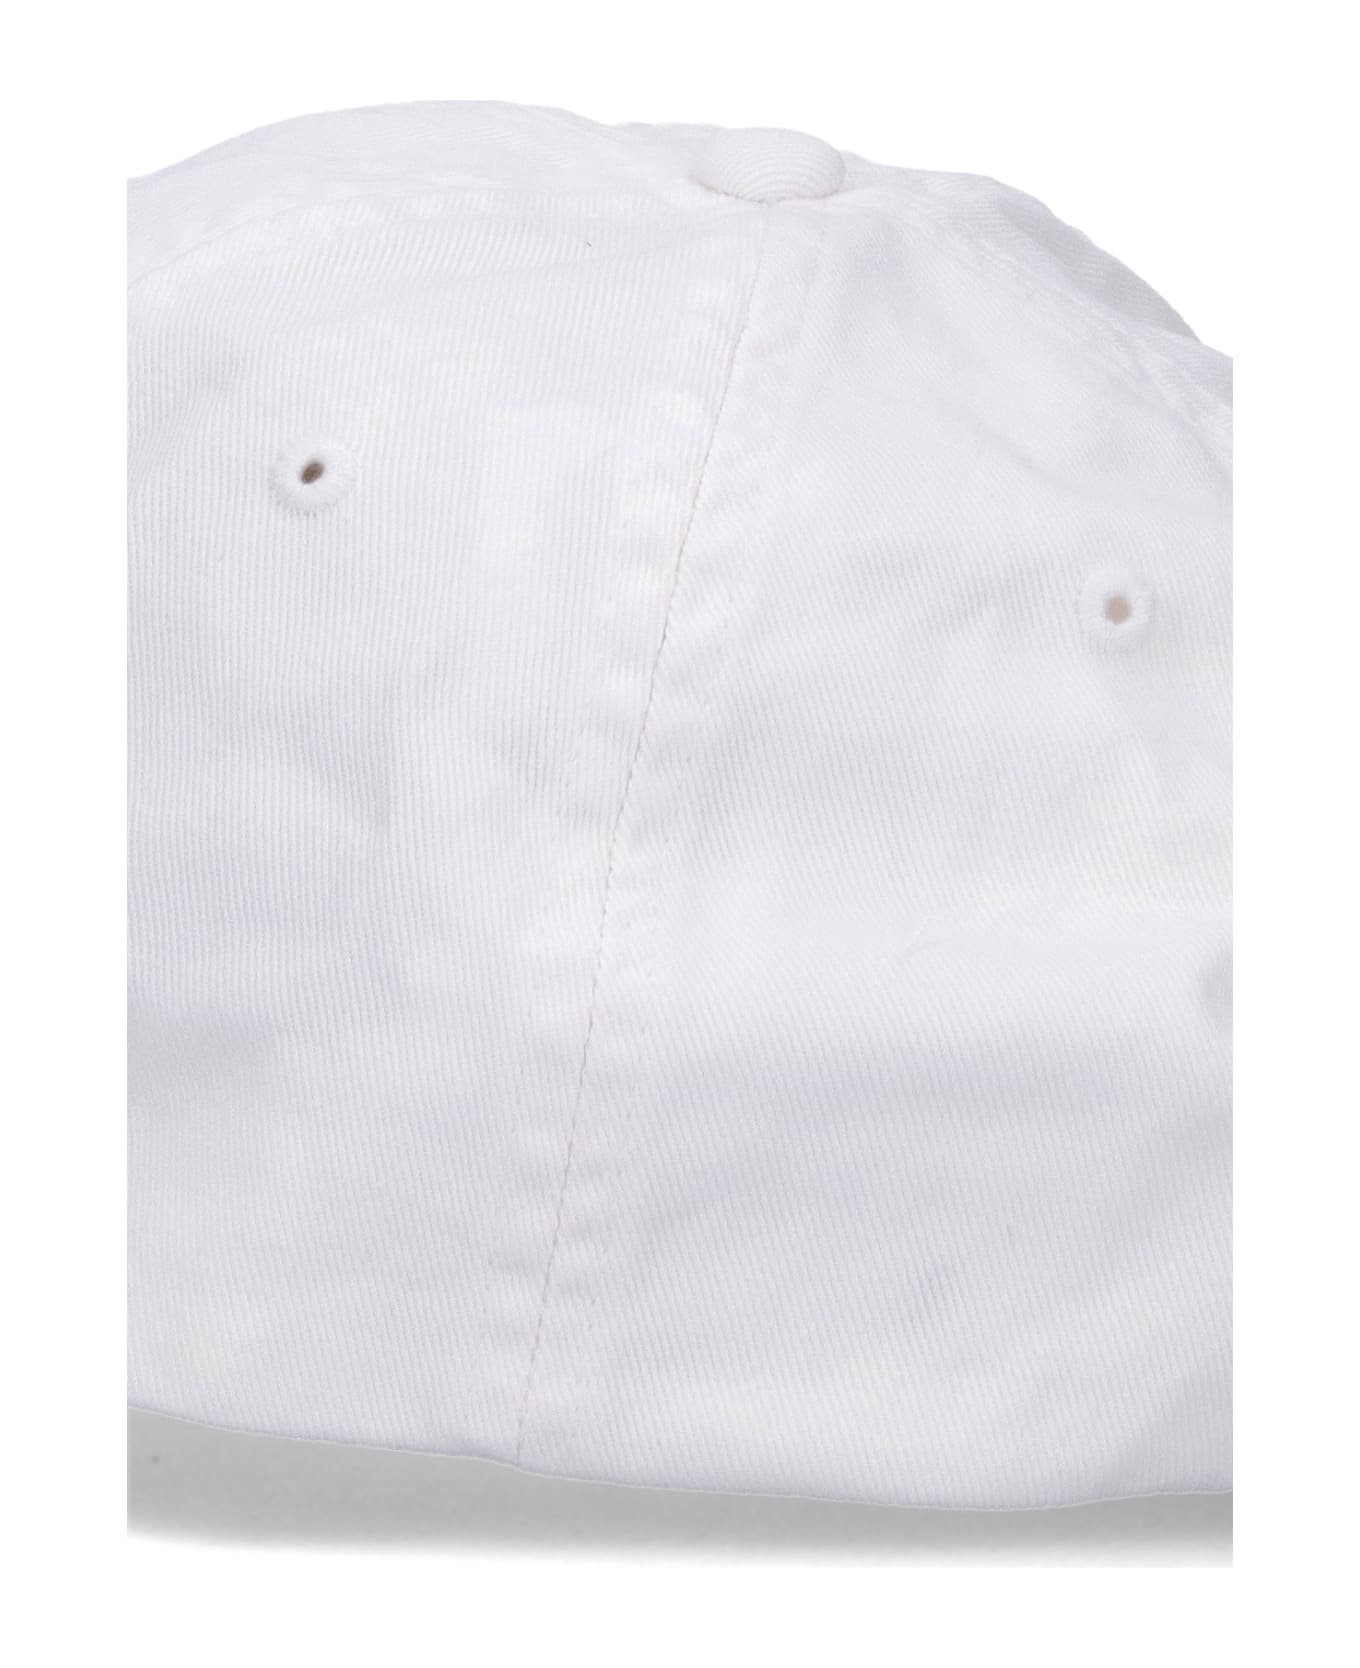 Polo Ralph Lauren Logo Baseball Hat - White 帽子